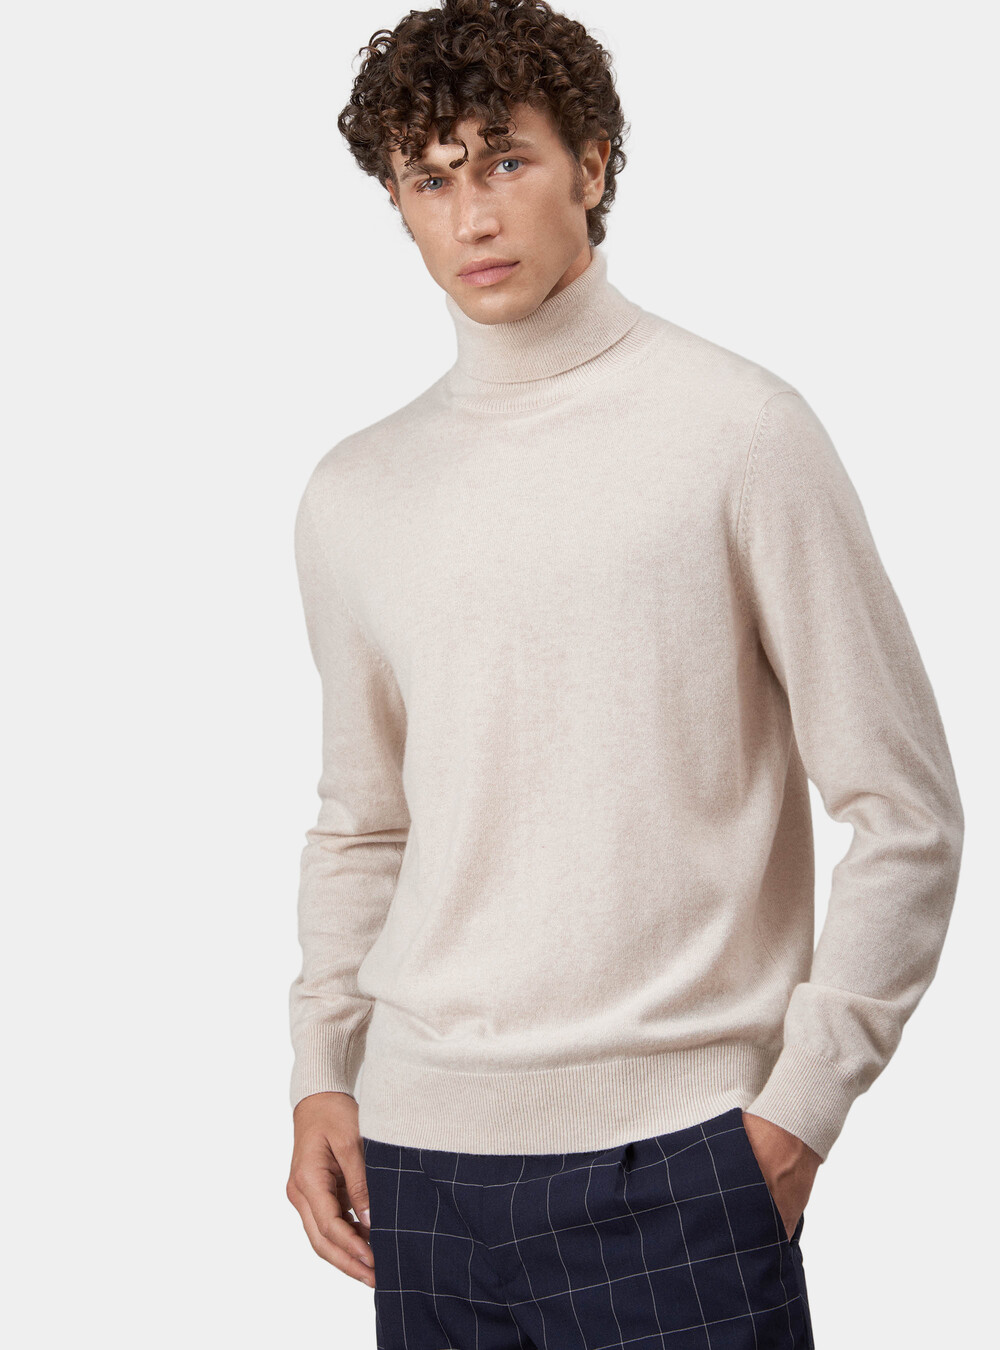 High neck sweater 100% cashmere | GutteridgeUS | Cashmere Selection Uomo